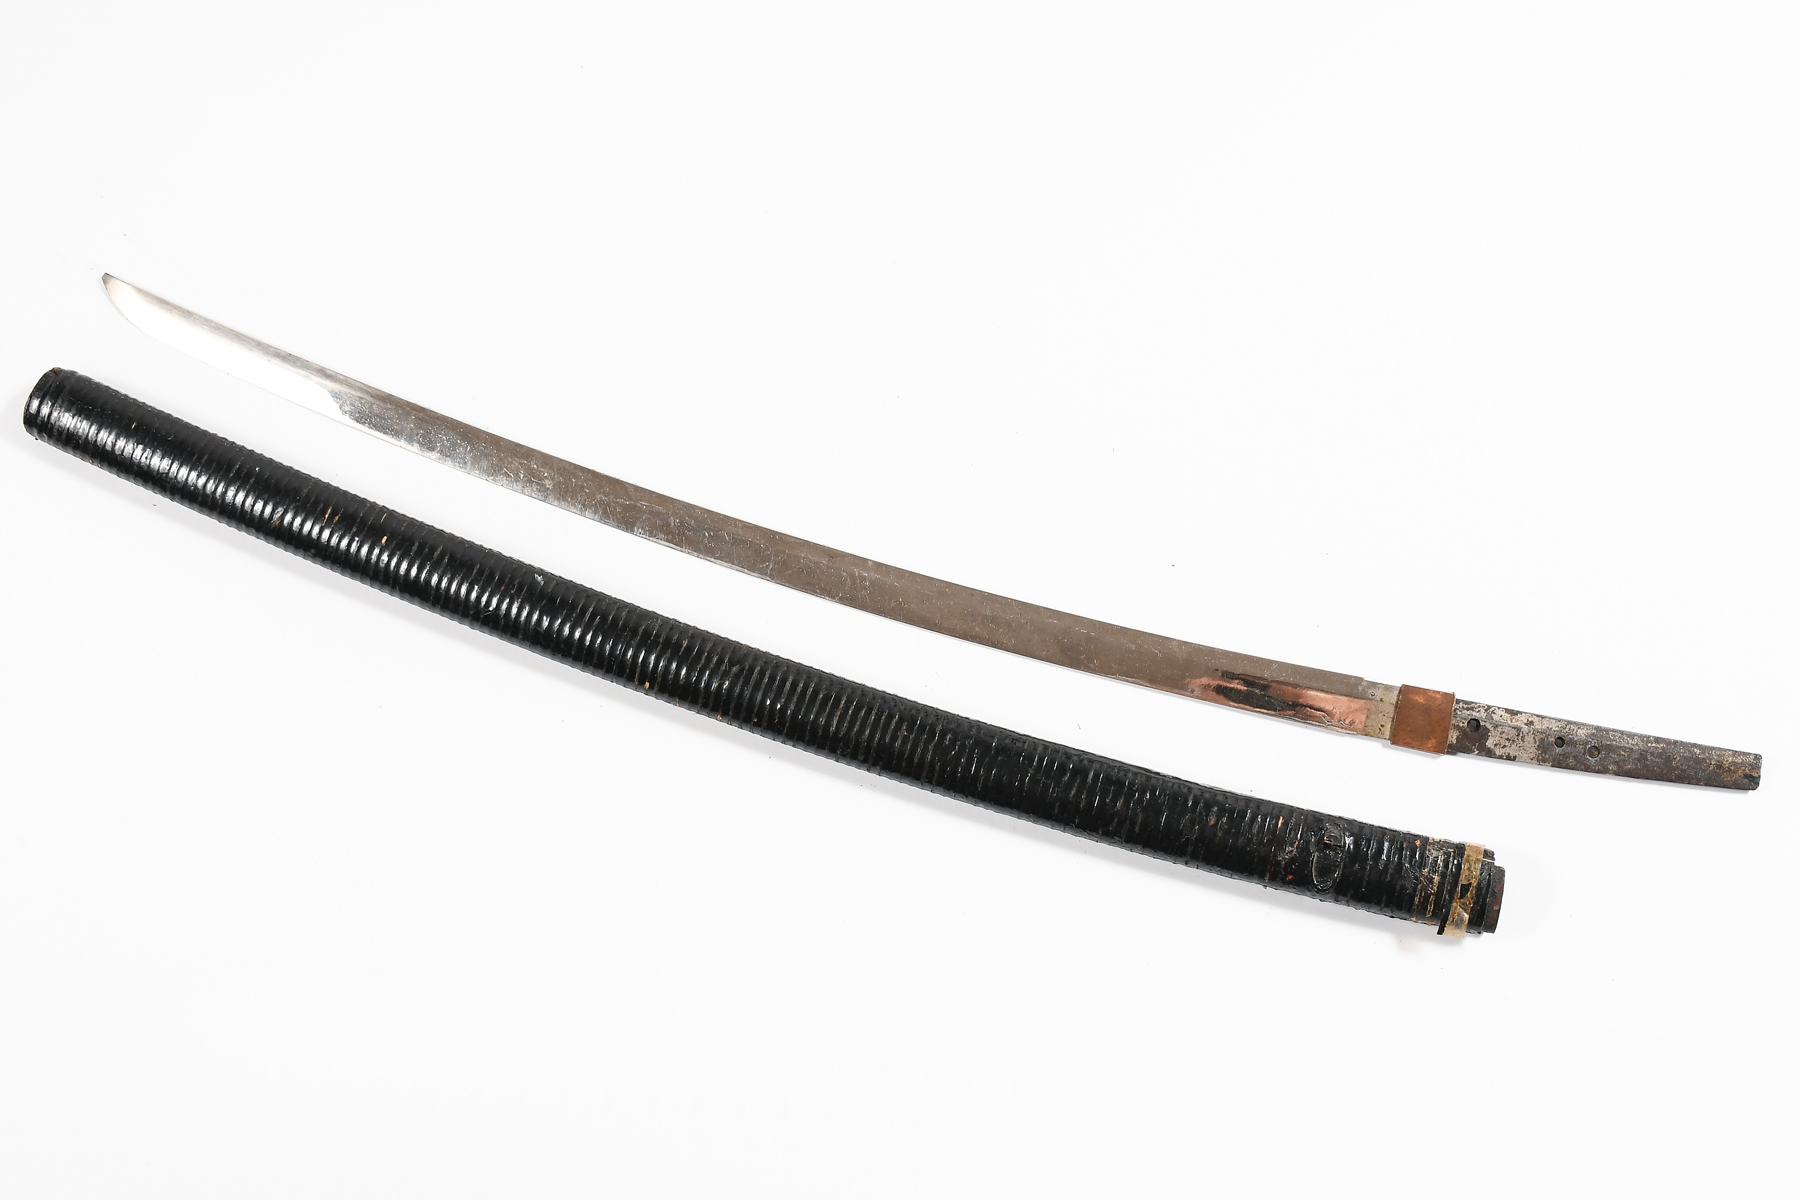 JAPANESE SAMURAI STYLE SWORD: With